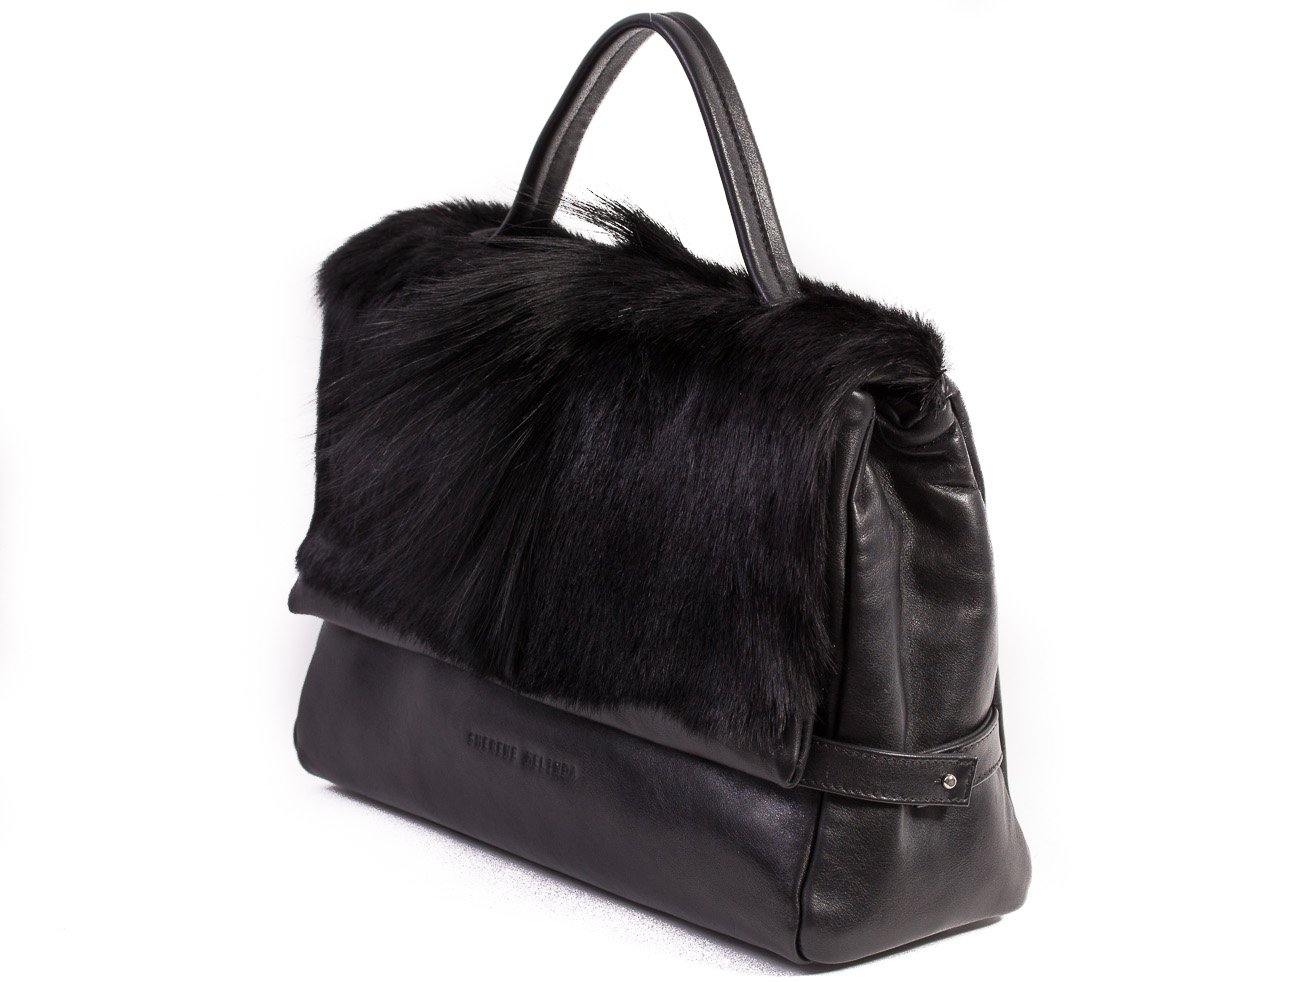 sherene melinda springbok hair-on-hide black leather smith tote bag Fan side angle